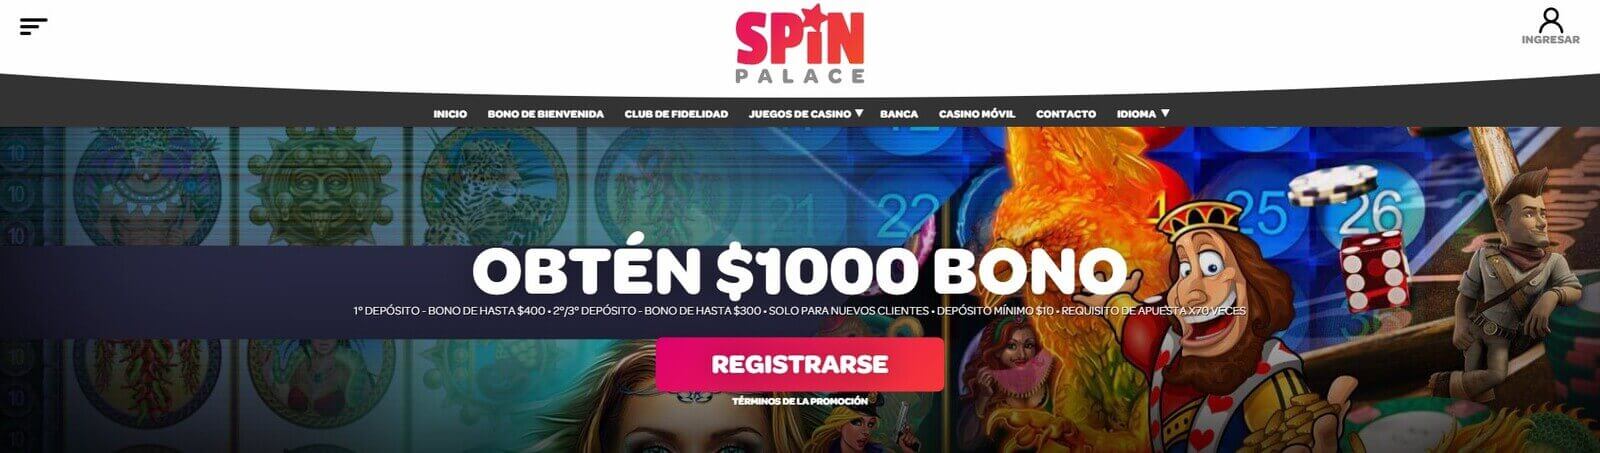 SpinPalace Casino online latinoamericano